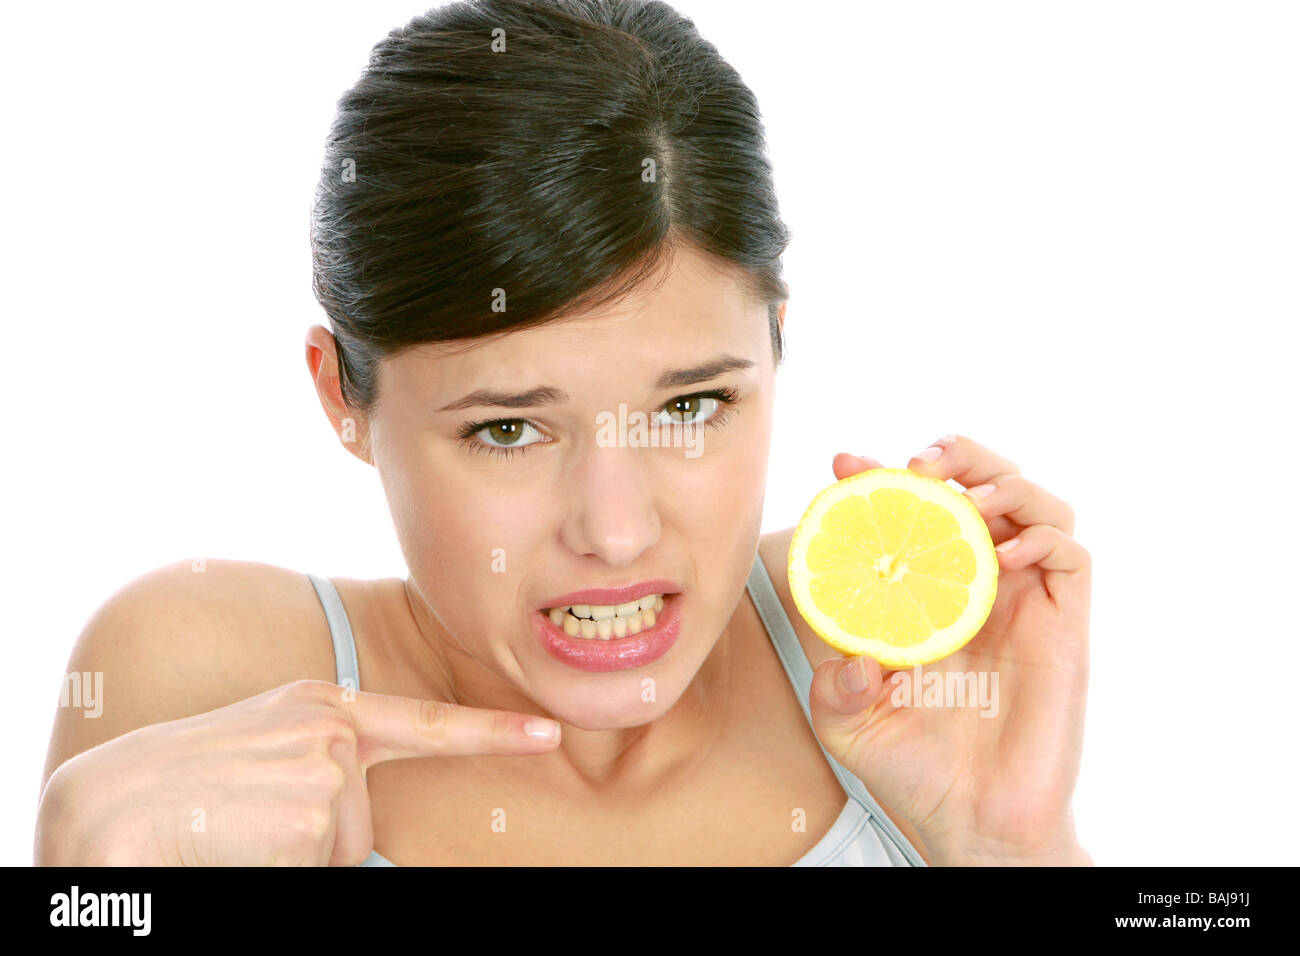 Junge Frau mit Zitrone macht Grimasse, Woman making face at lemon Stock Photo